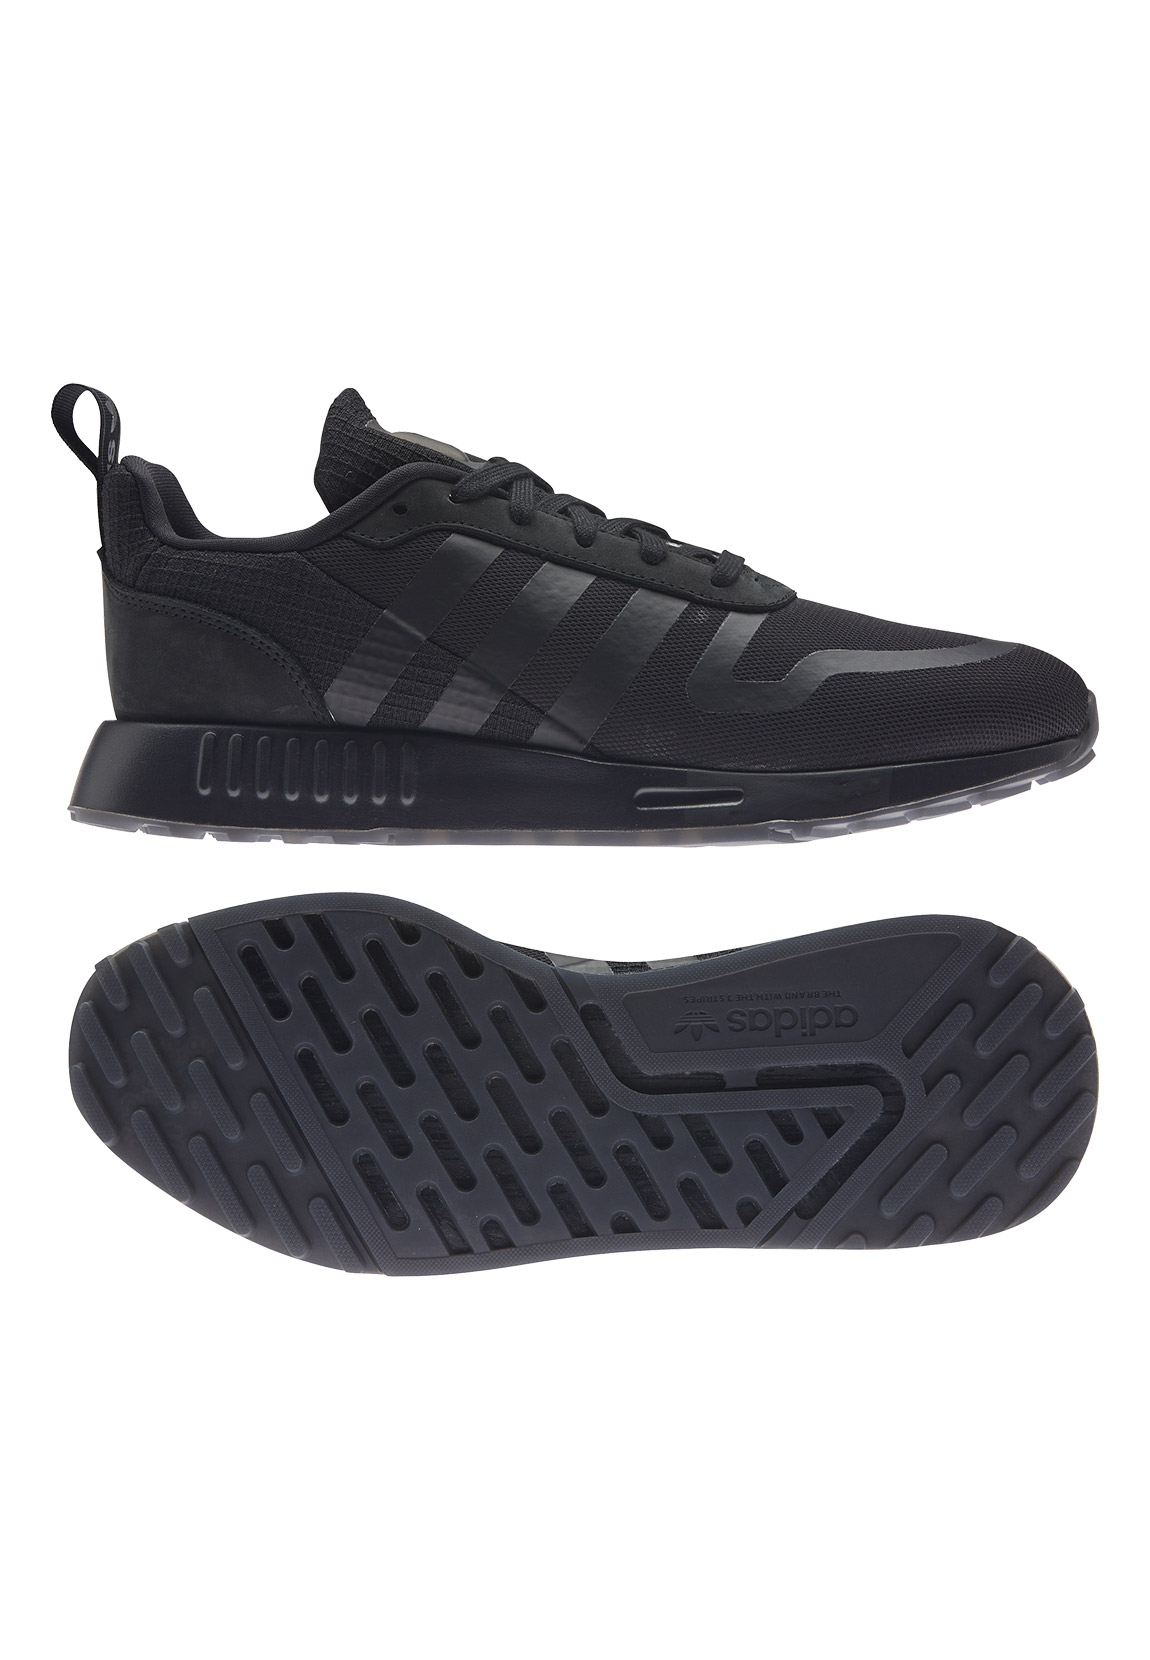 Adidas Originals Multix Turnschuhe EU 44 2/3 Core Black / Carbon / Black Bl günstig online kaufen